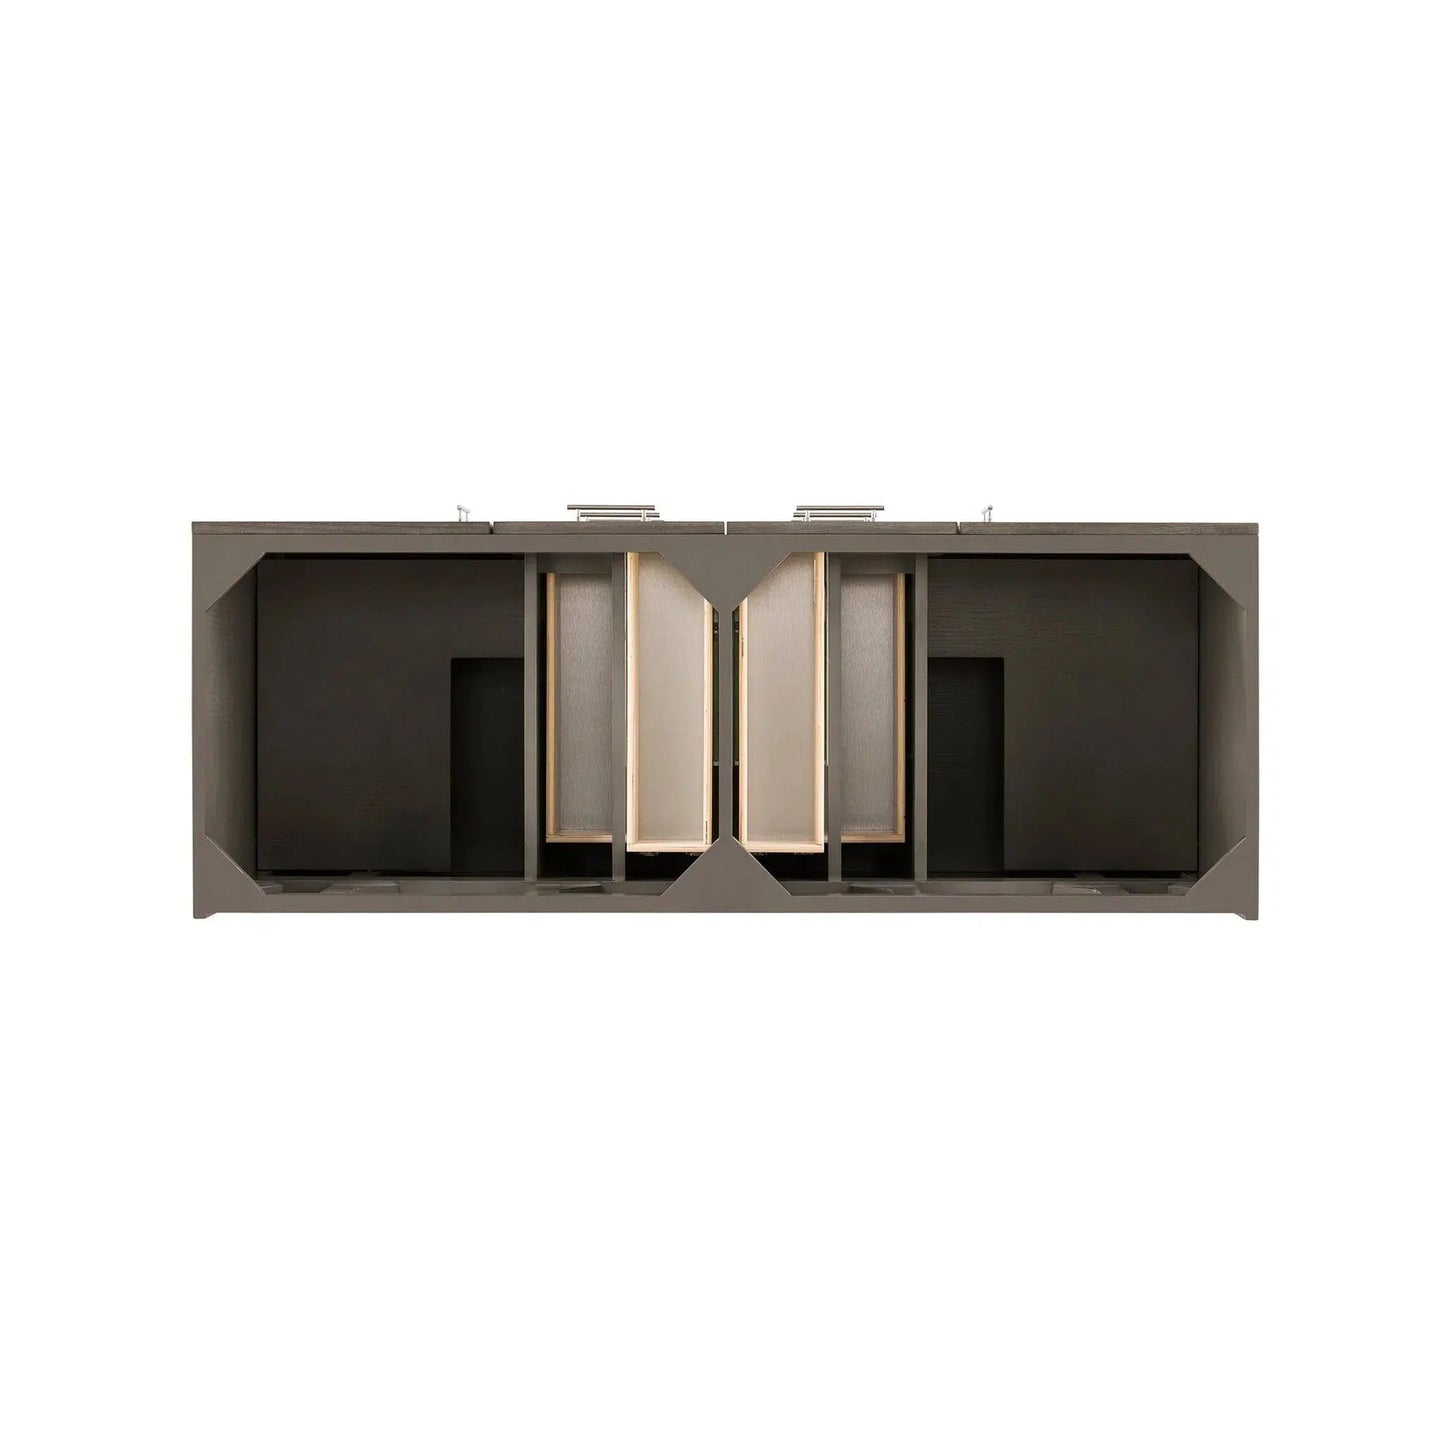 James Martin Metropolitan 60" Double Silver Oak Bathroom Vanity With 1" Ethereal Noctis Quartz Top and Rectangular Ceramic Sink